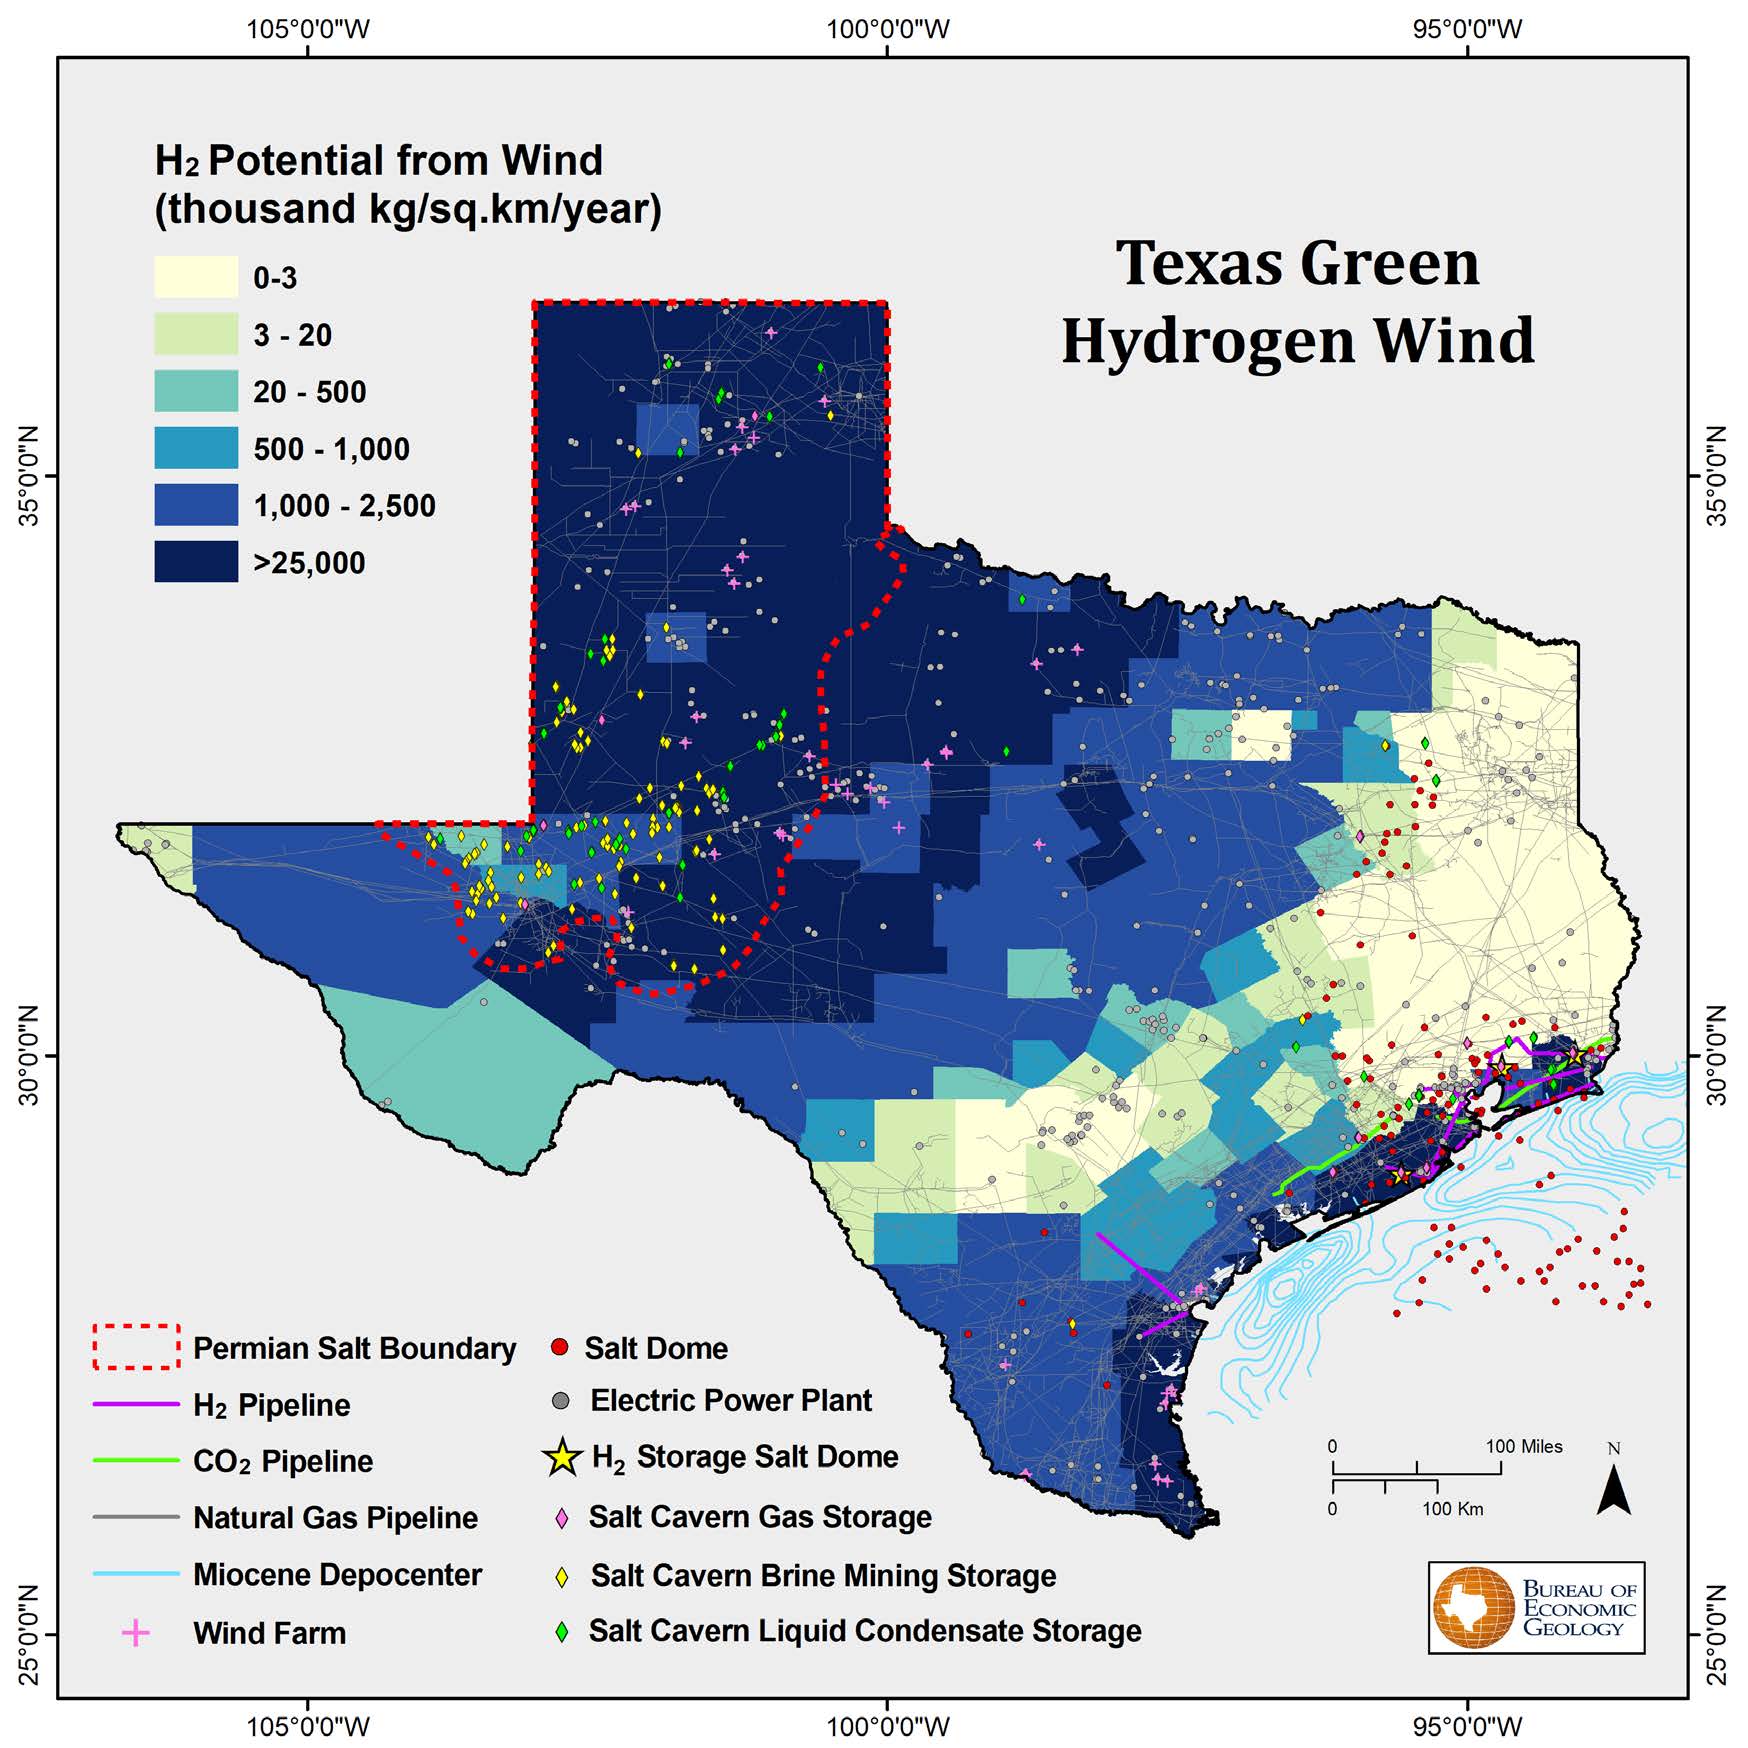 Texas Green Hydrogen Wind